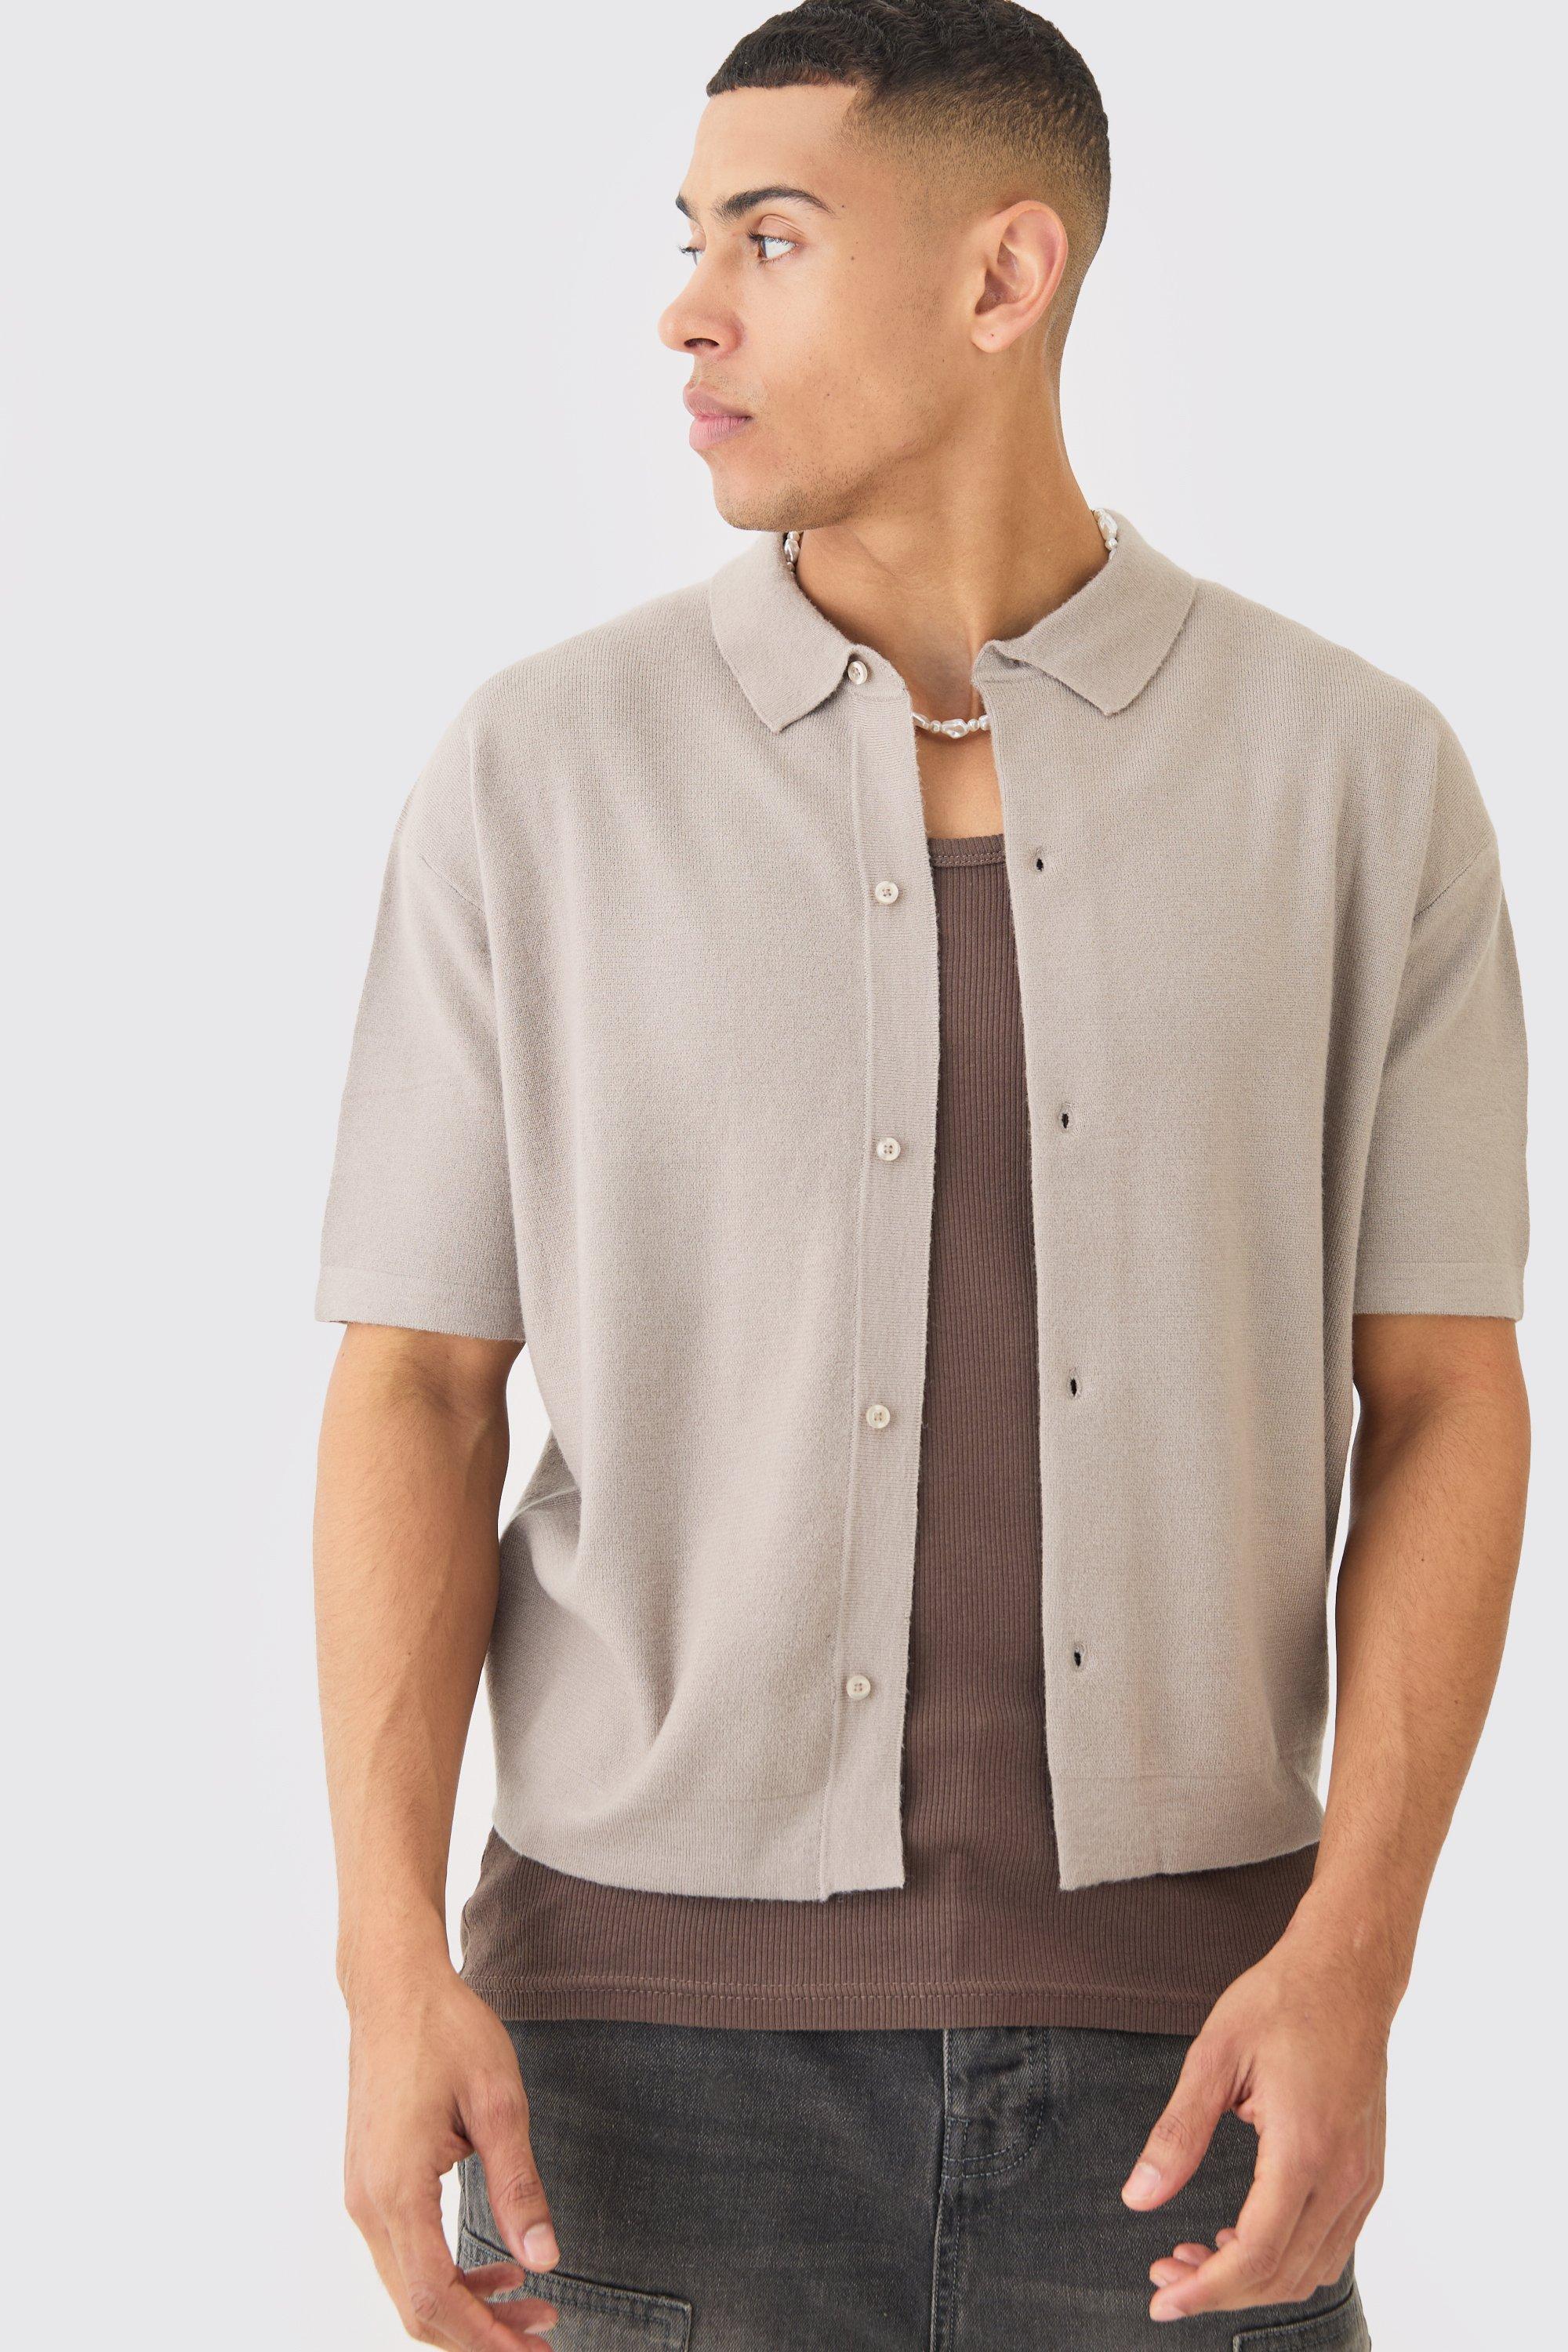 Image of Oversized Boxy Fit Short Sleeve Knitted Shirt, Grigio